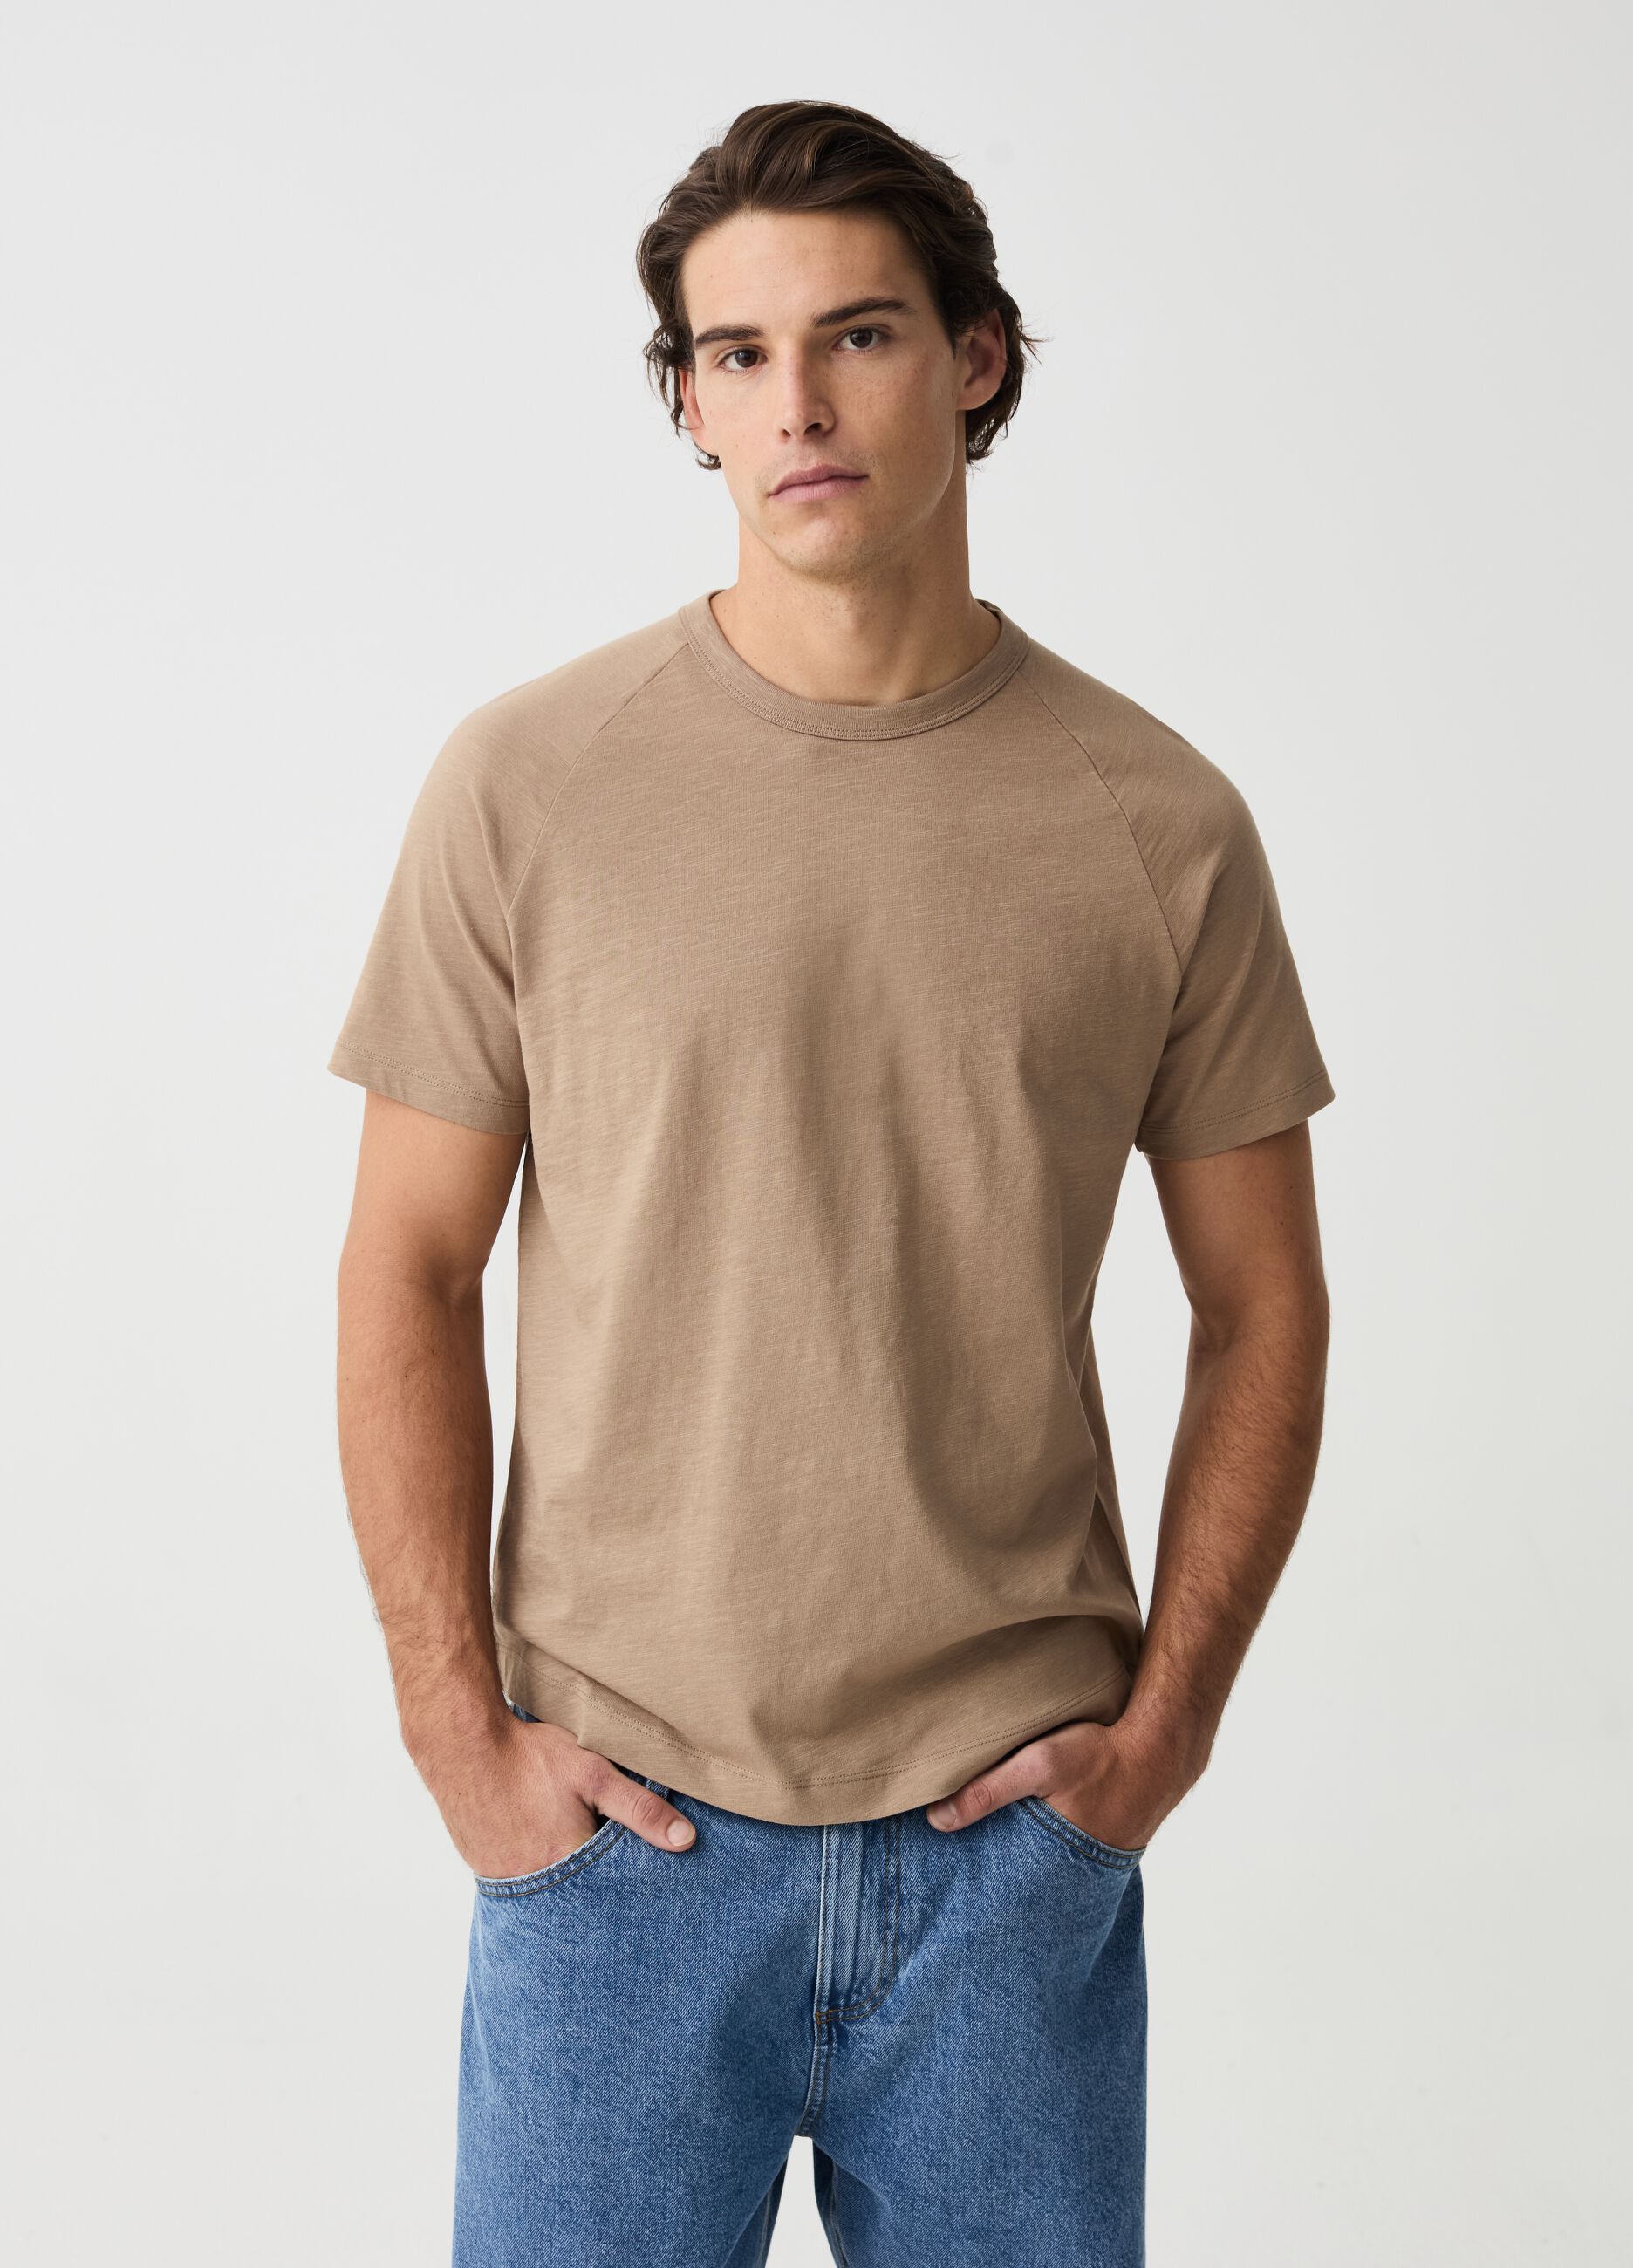 Slub jersey T-shirt with round neck